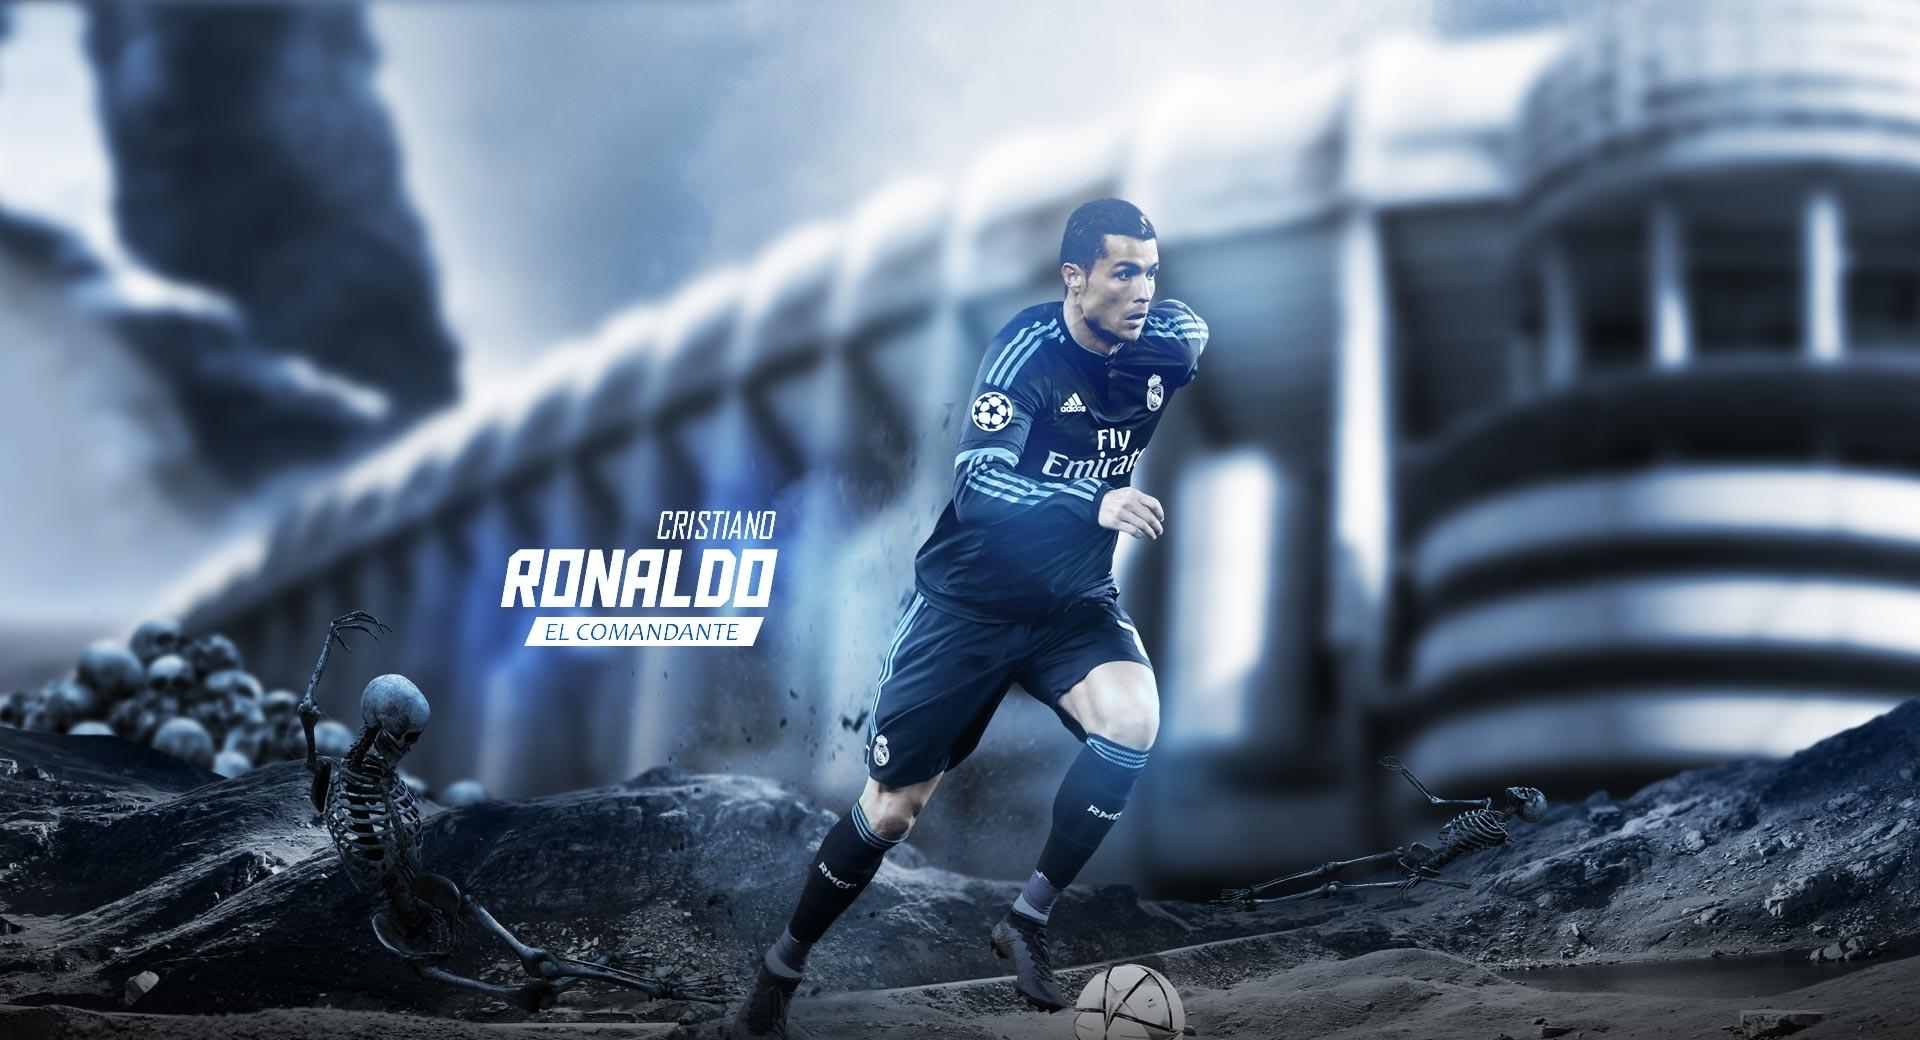 Cristiano Ronaldo - El Comandante at 640 x 960 iPhone 4 size wallpapers HD quality